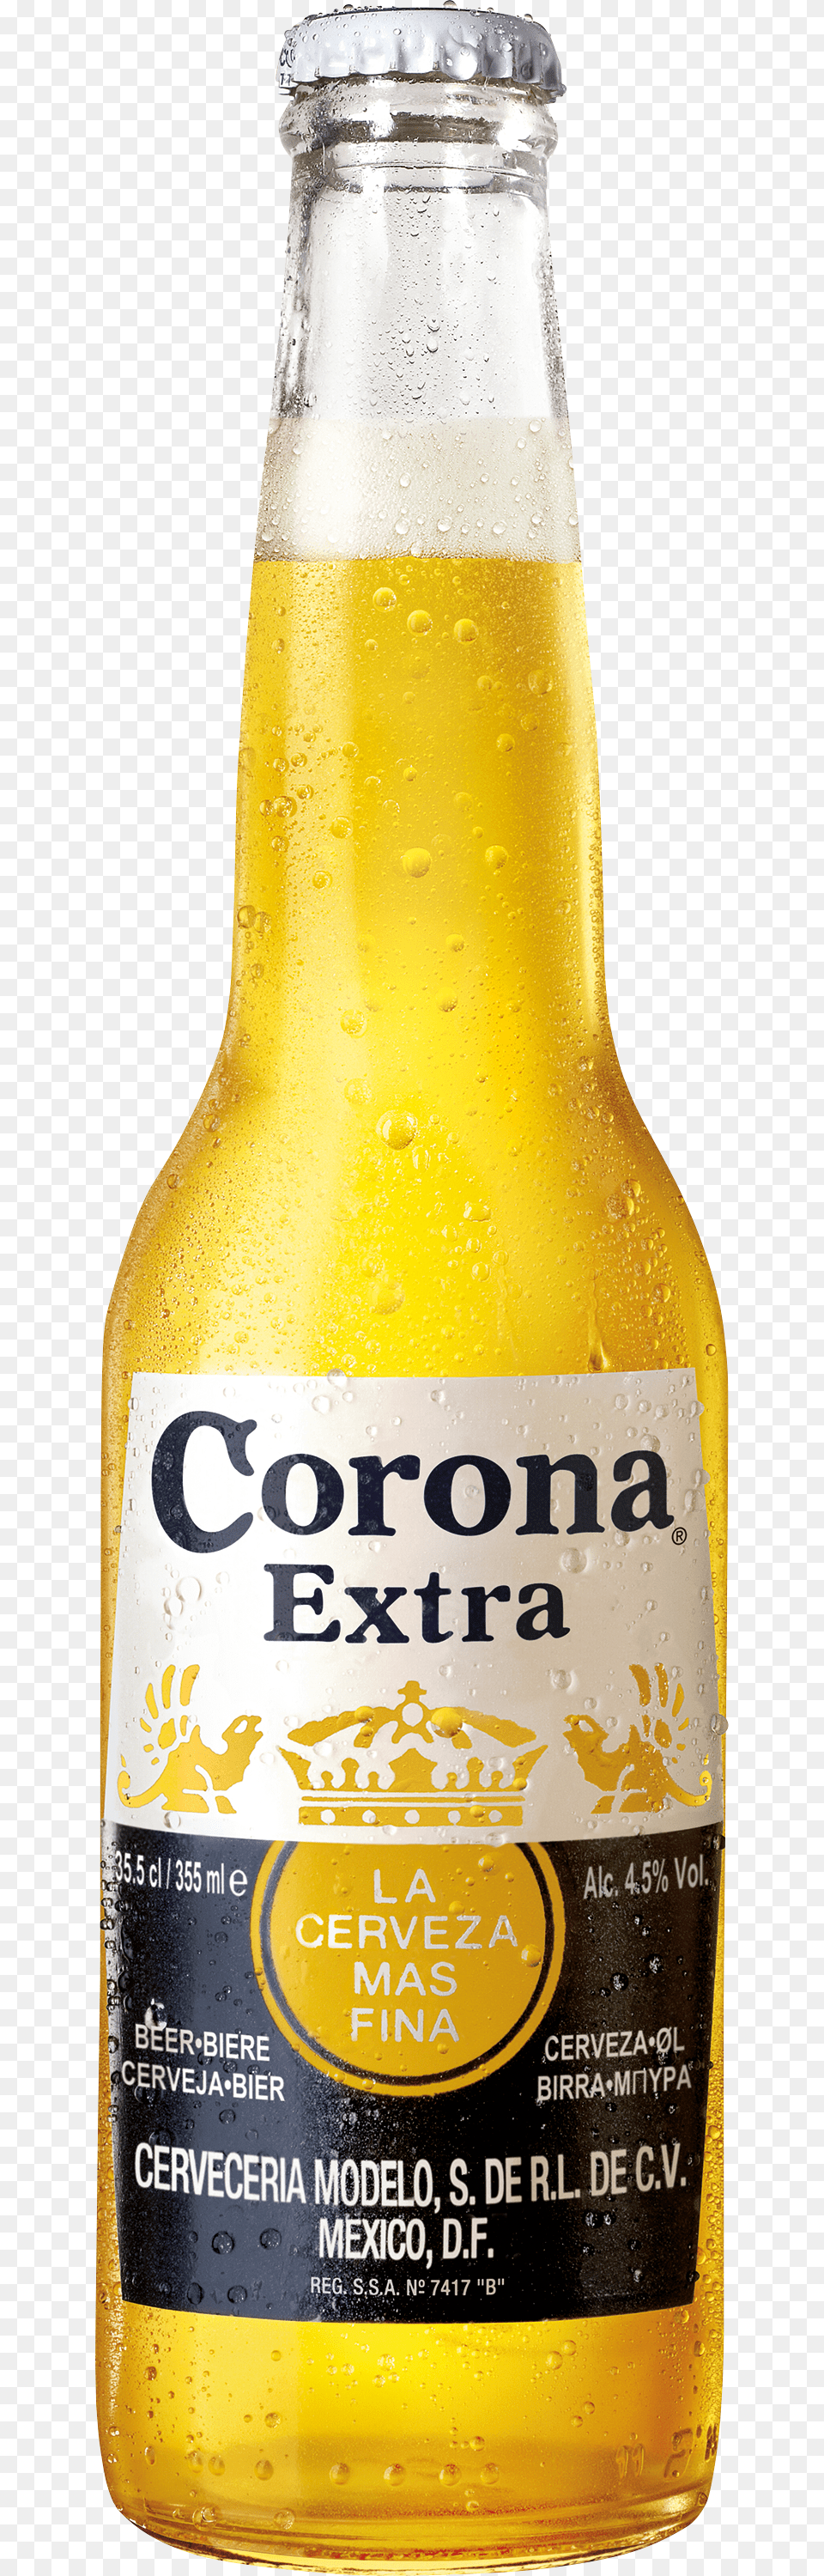 Corona Beer Corona Extra Beer Alcohol, Beverage, Beer Bottle, Bottle Free Transparent Png